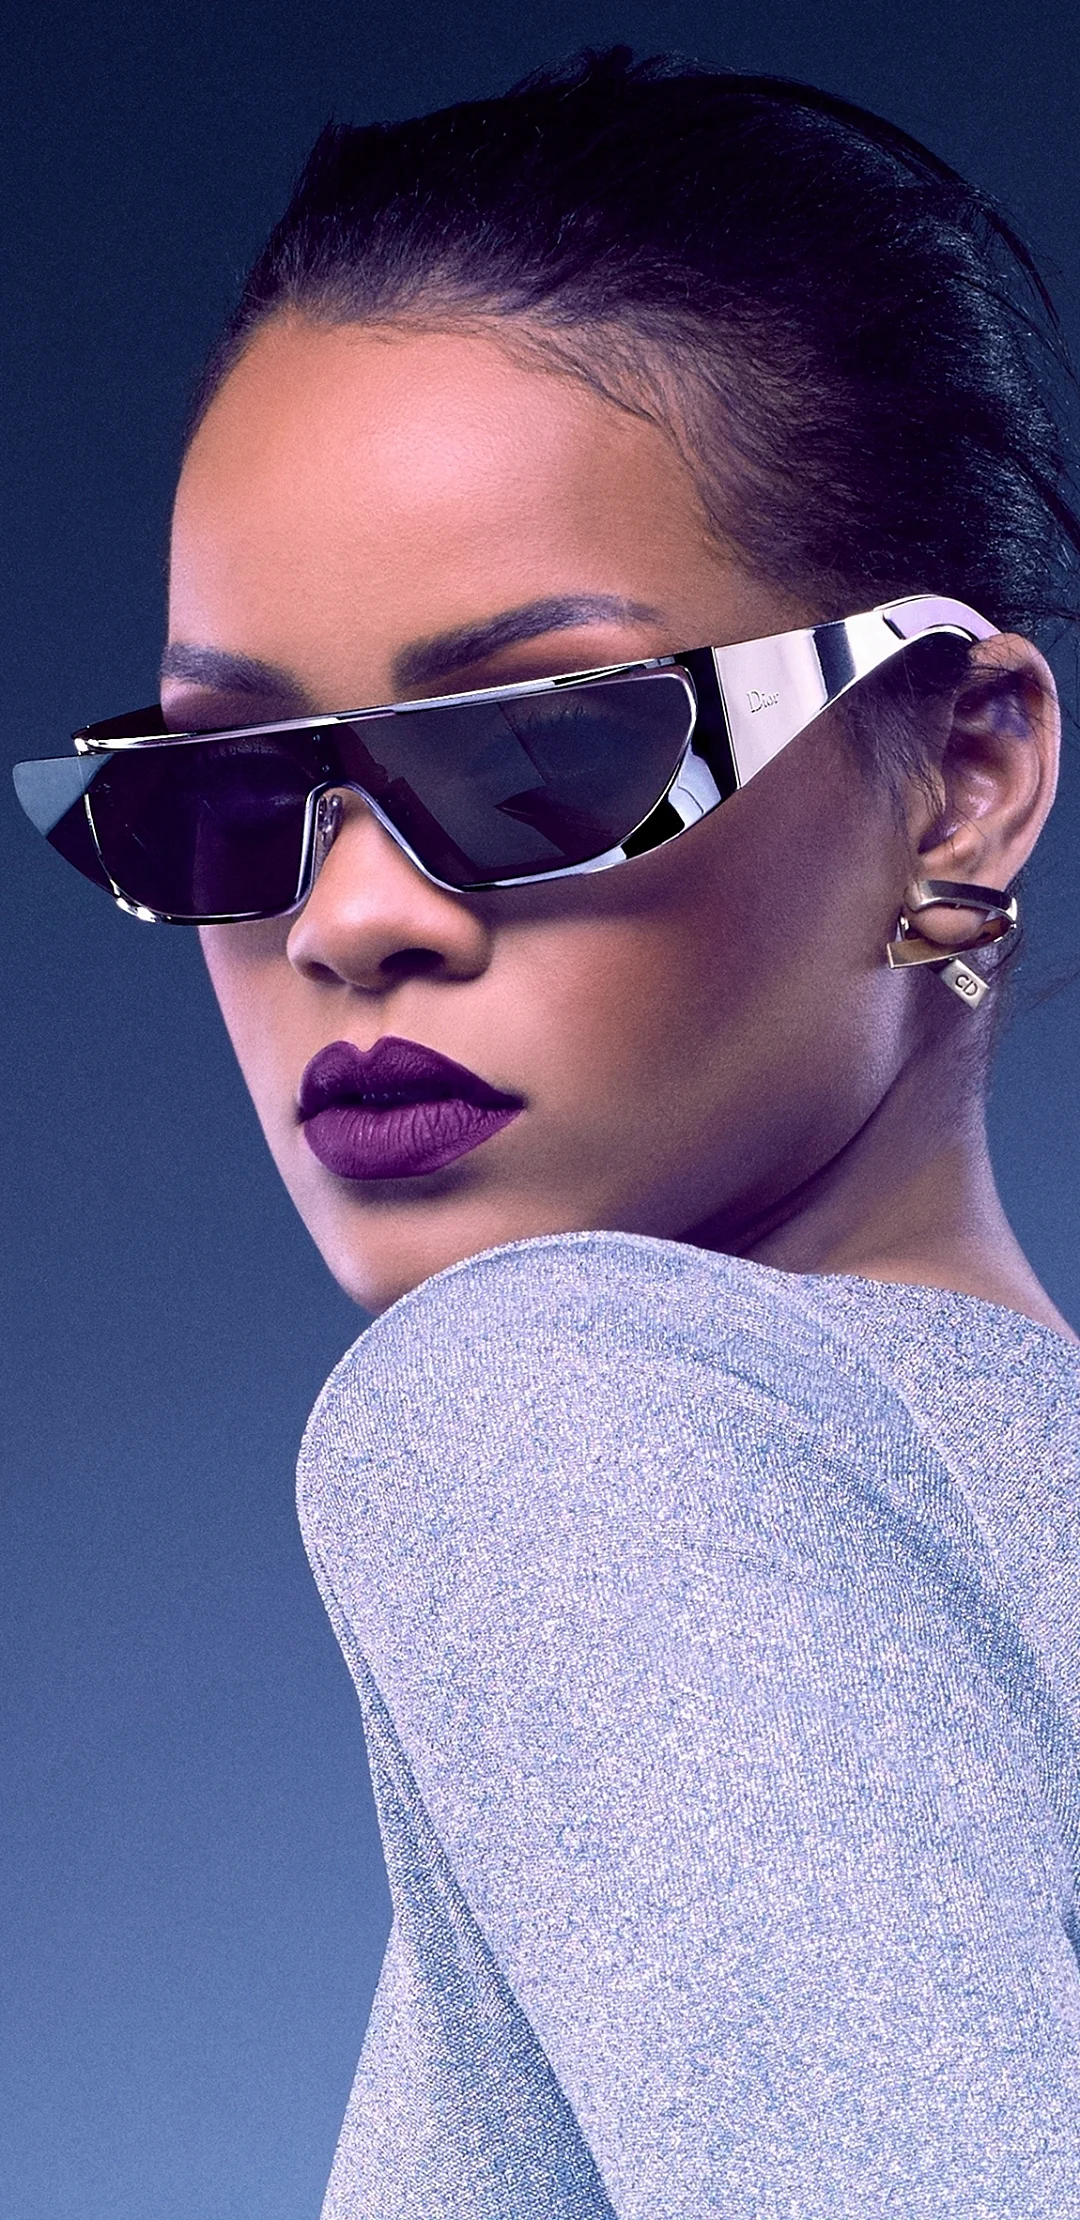 Dior Sunglasses Women Wallpaper For iPhone